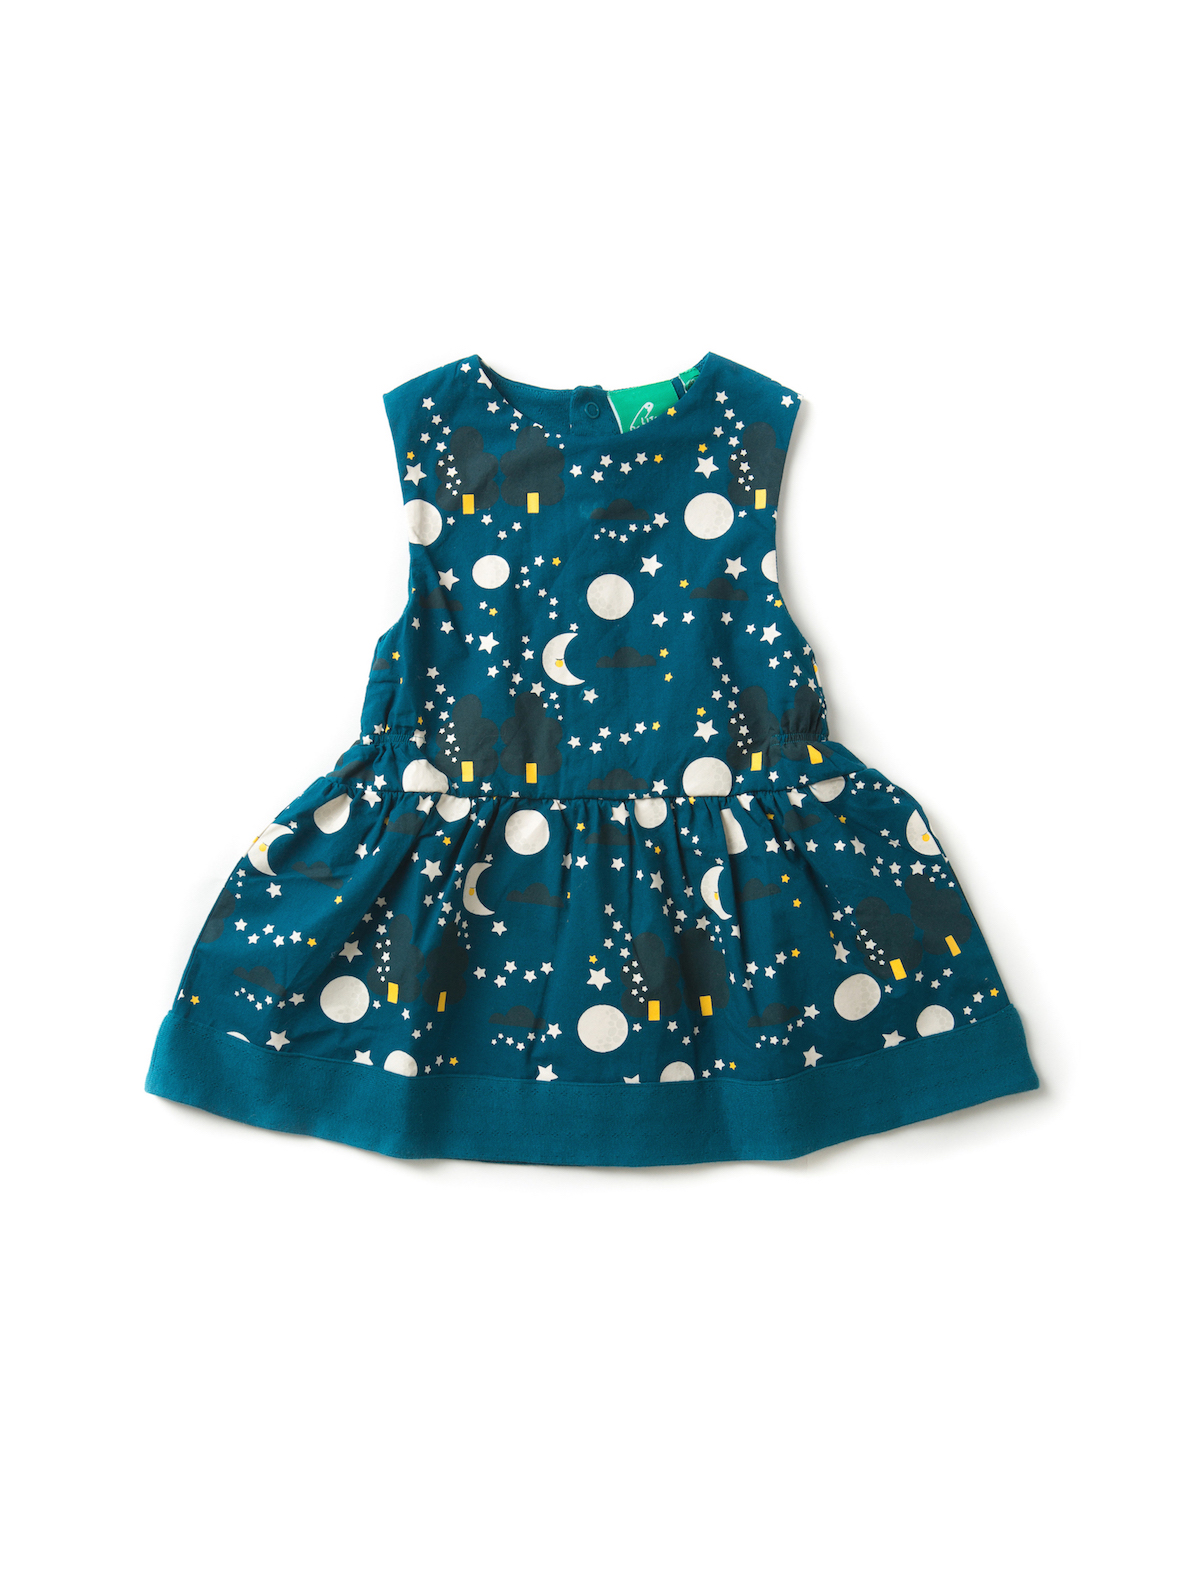 Ethical Kids Dress - My Fair Baby, Fairtrade Online Shop